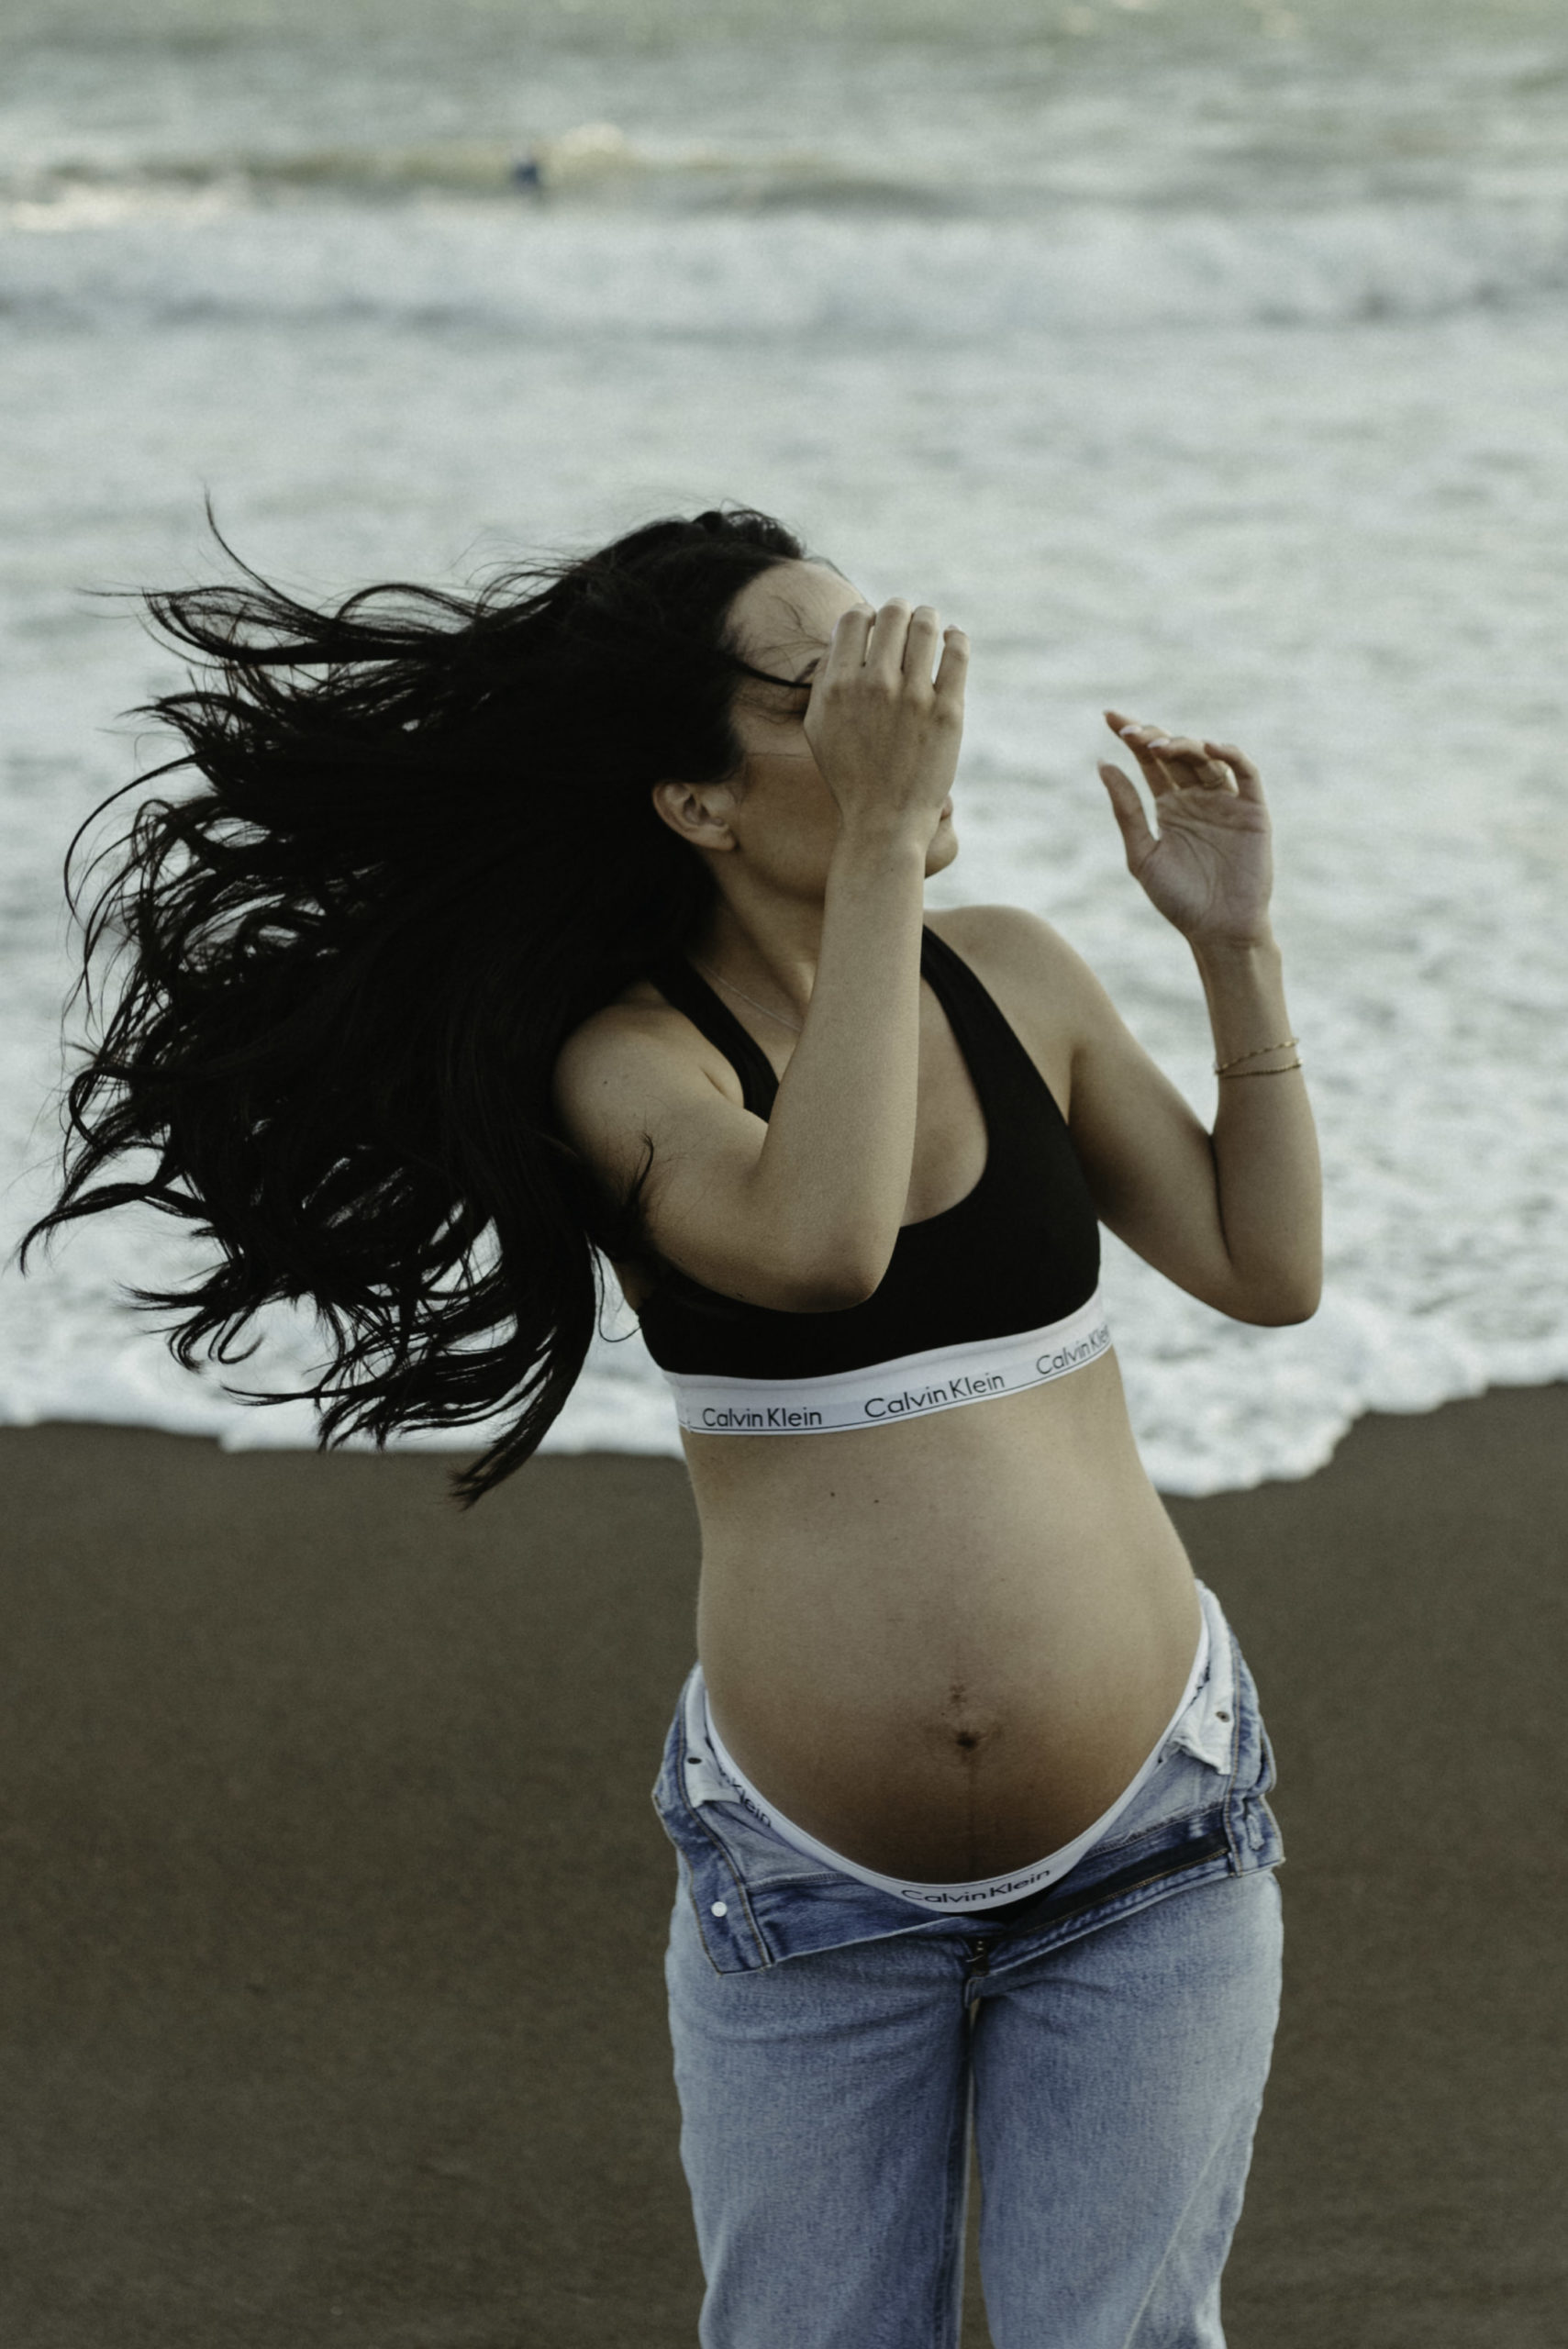 Calvin Klein Maternity Shoot